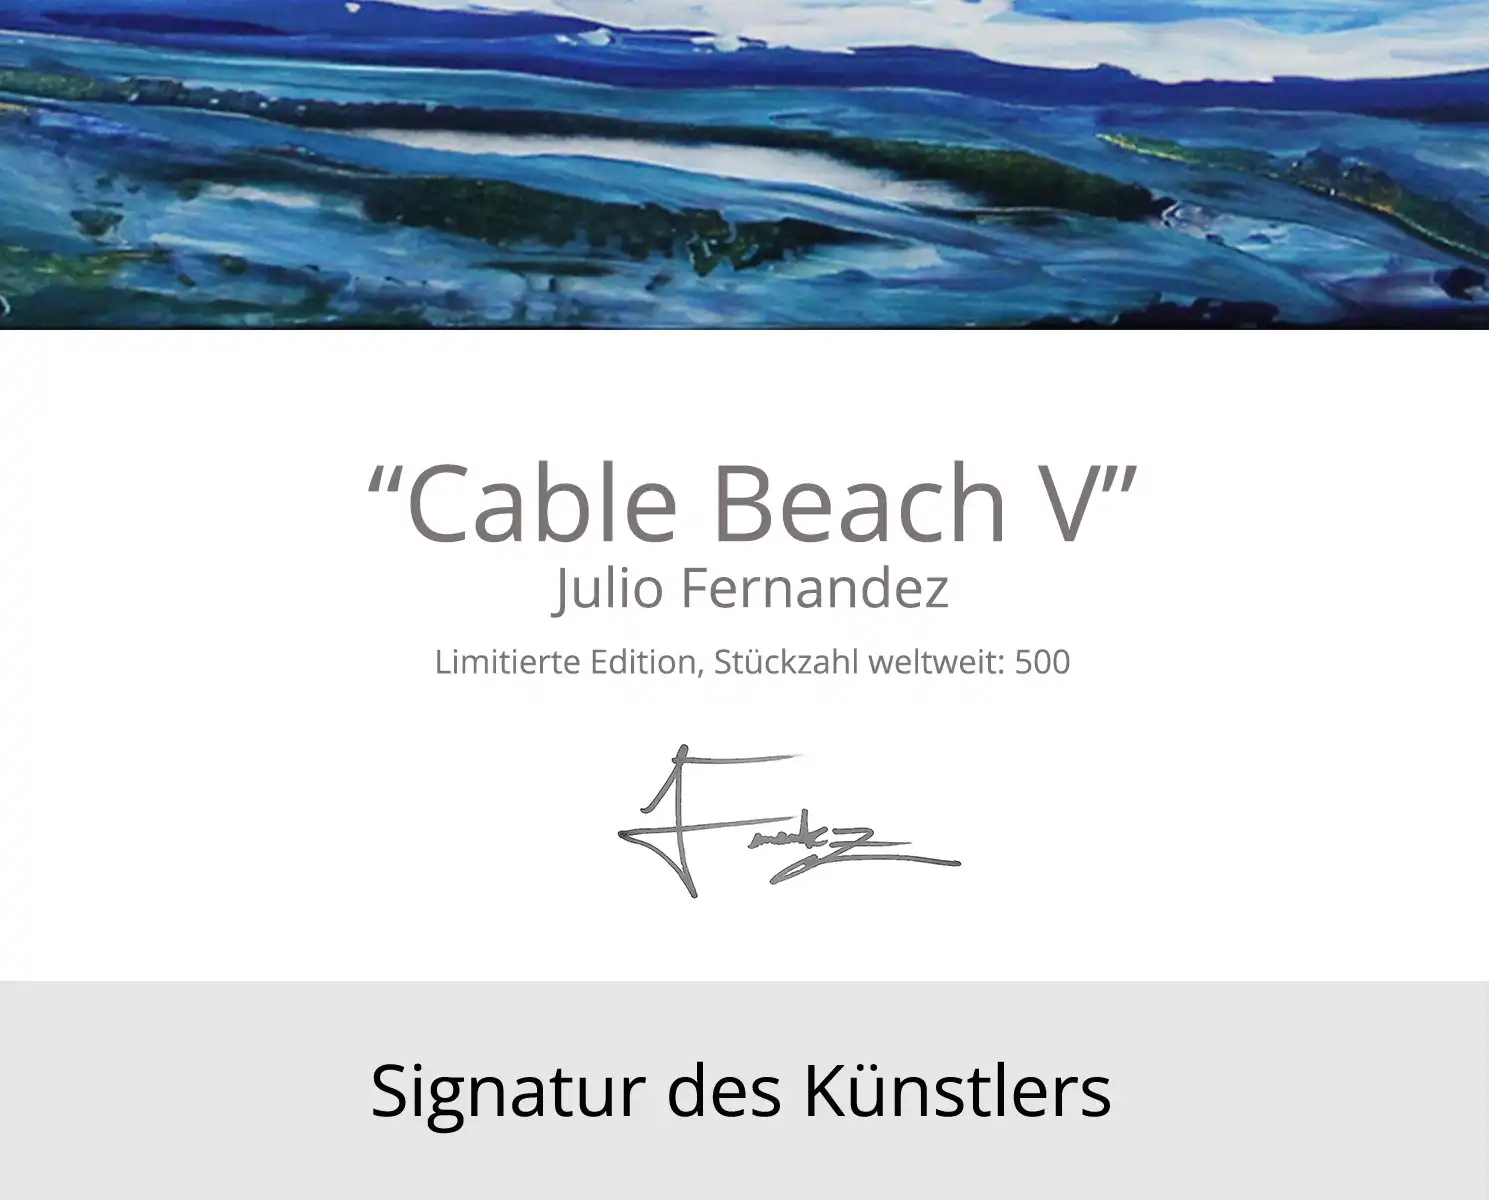 Limitierte Edition auf Papier, J. Fernandez "Cable Beach V", Fineartprint, Kollektion E&K